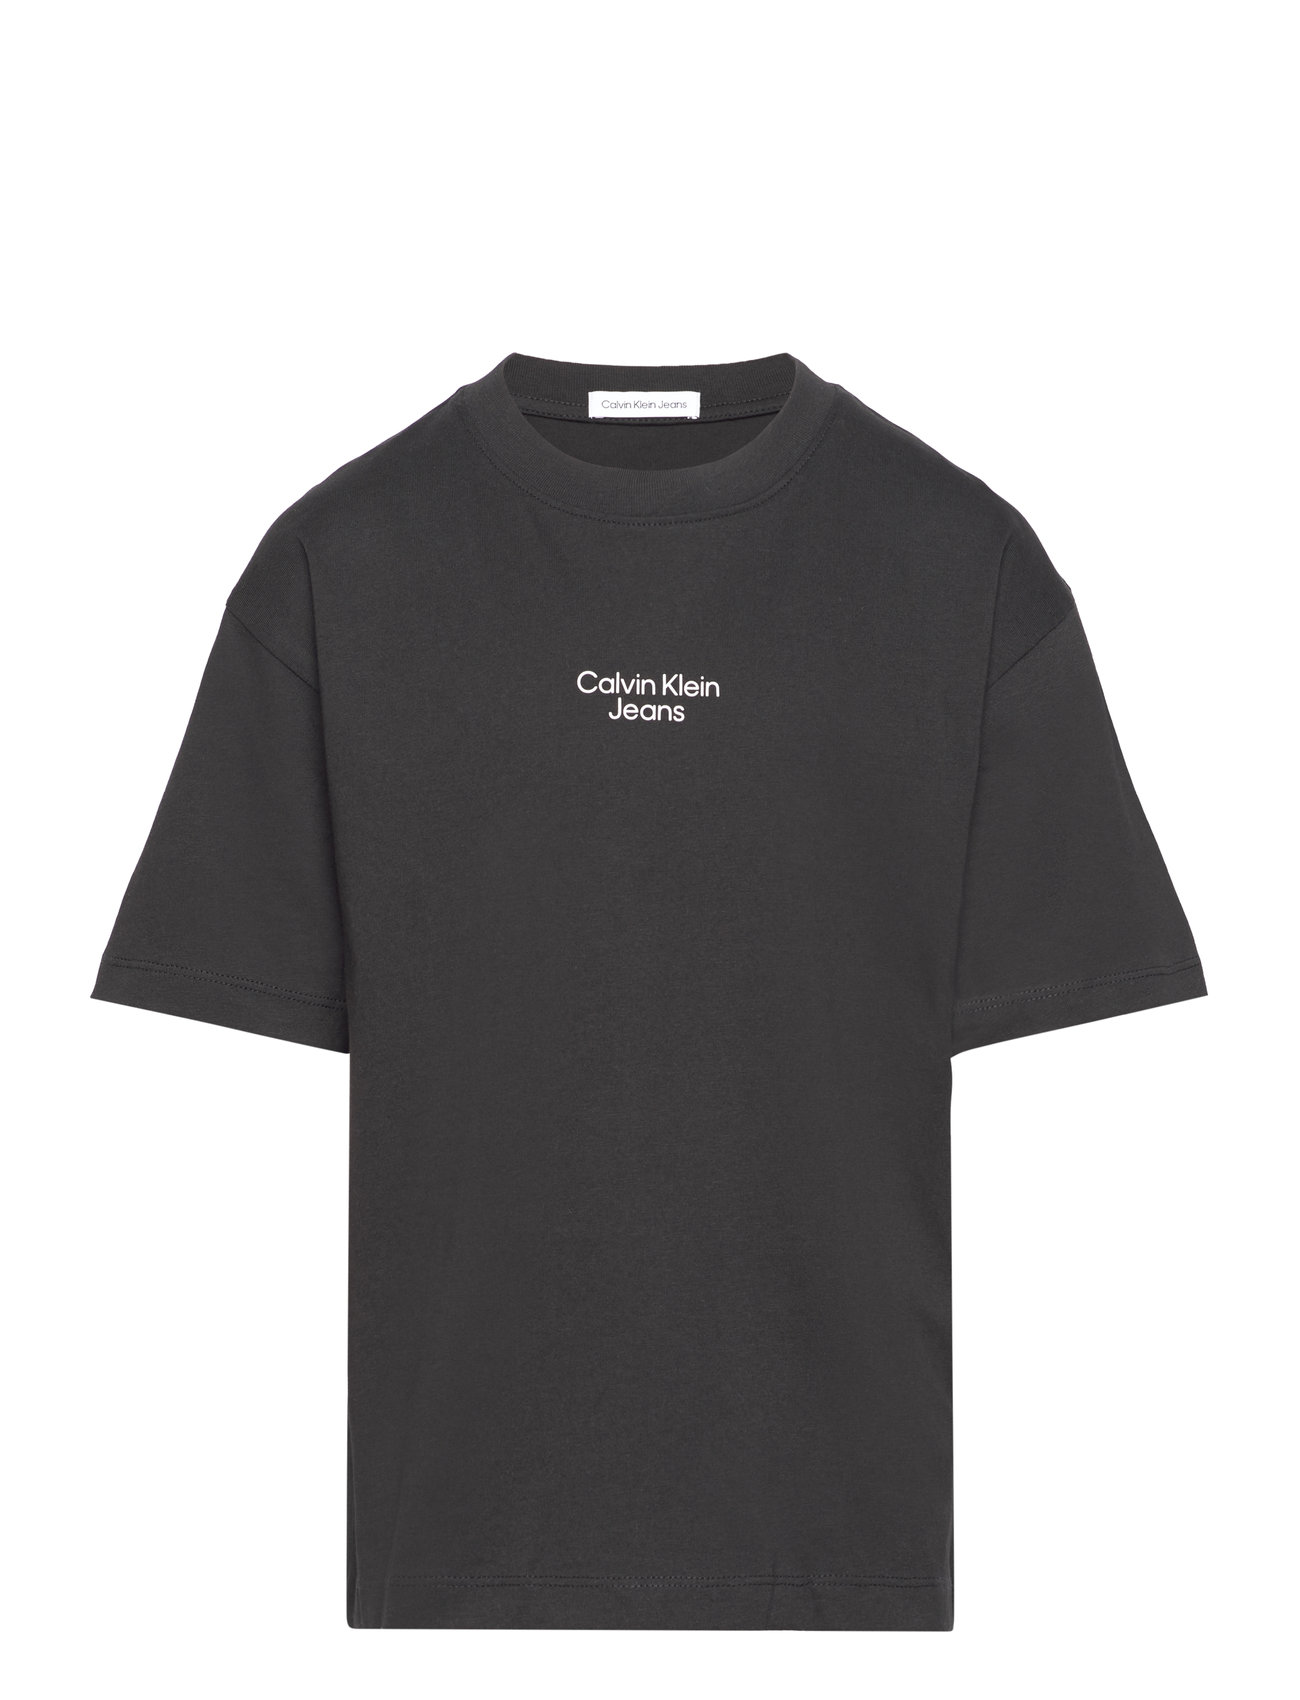 Serenity Back Print Rlxd T-Shirt Tops T-shirts Short-sleeved Black Calvin Klein